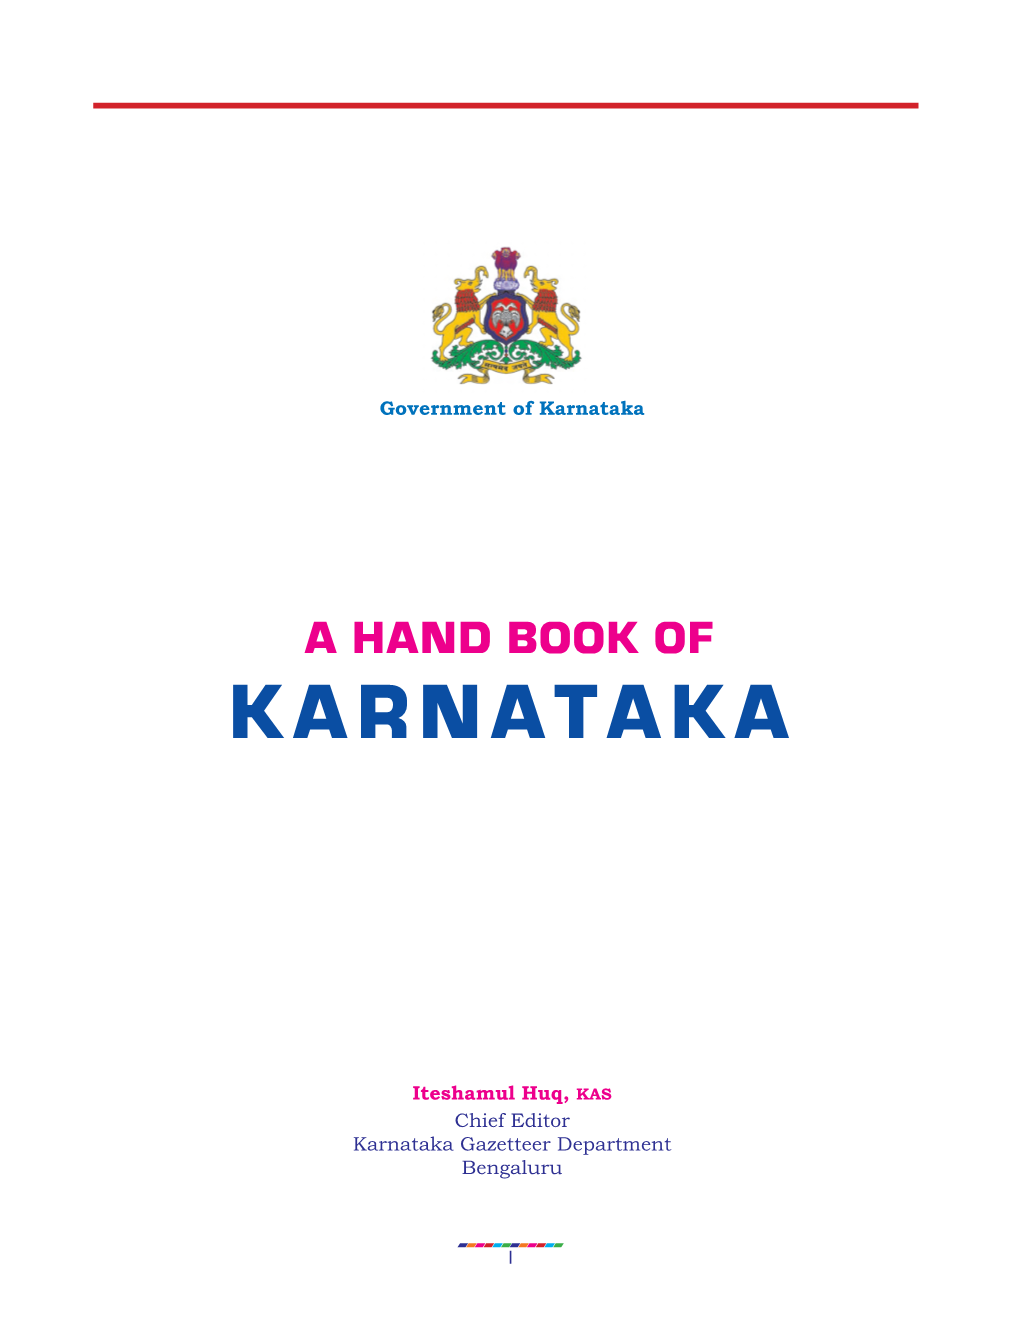 Karnataka Gazetteer Department Bengaluru